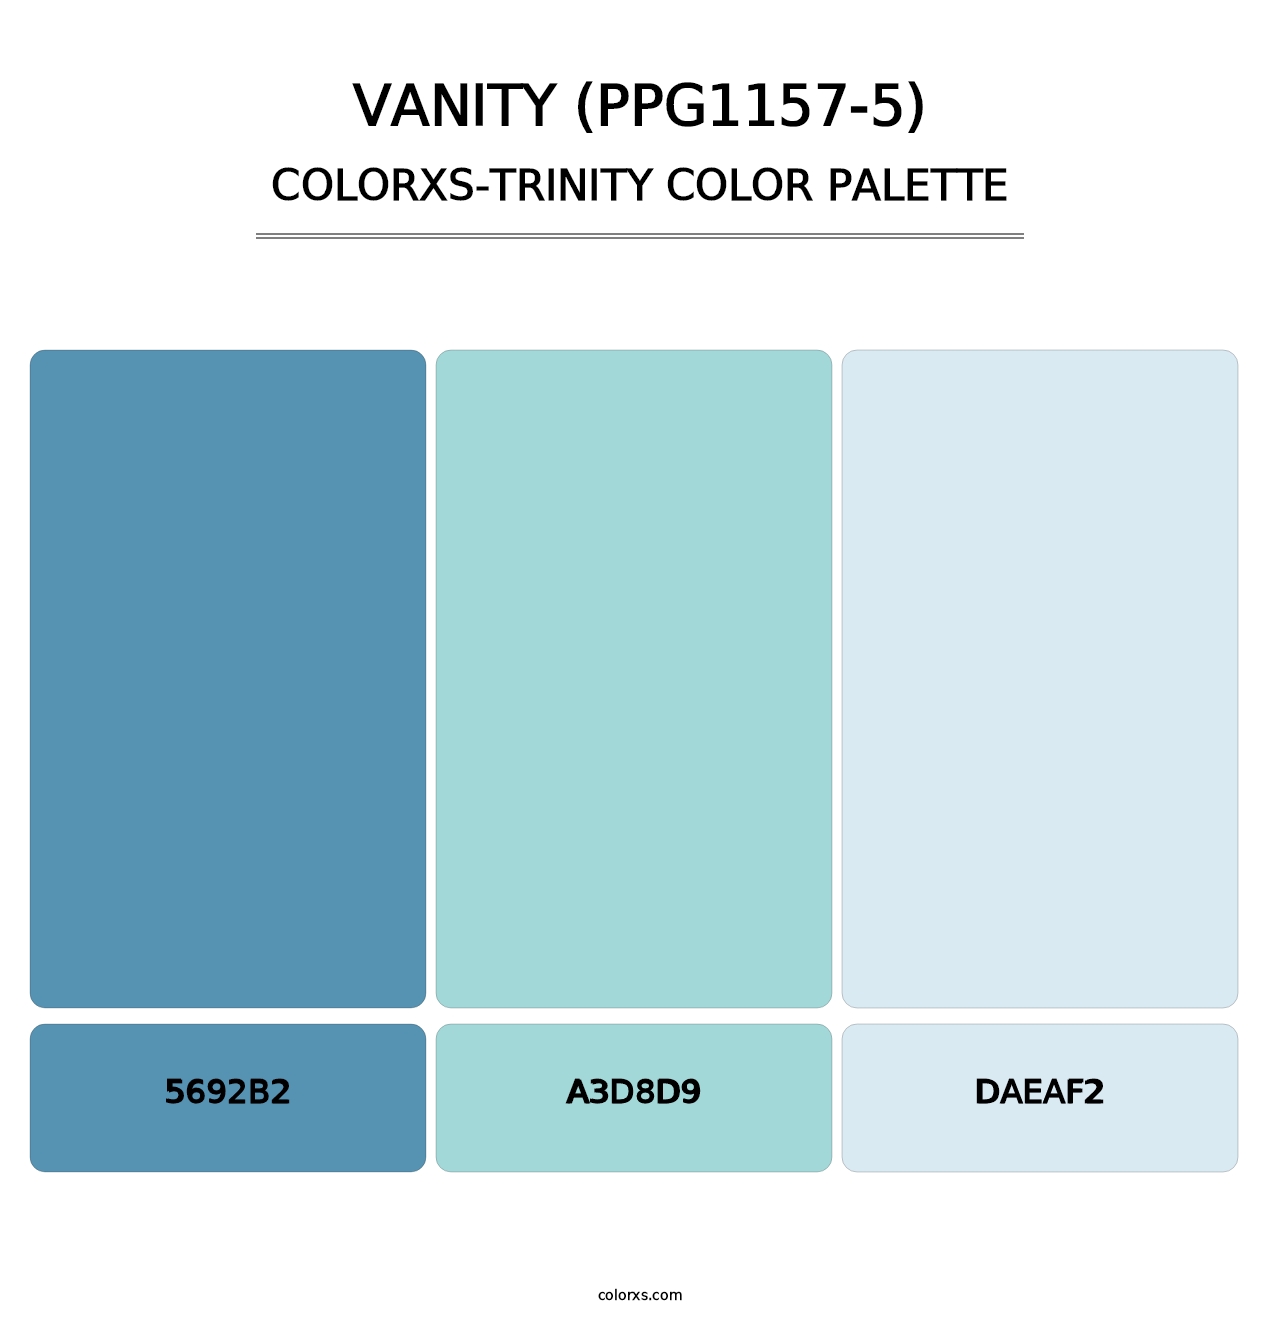 Vanity (PPG1157-5) - Colorxs Trinity Palette